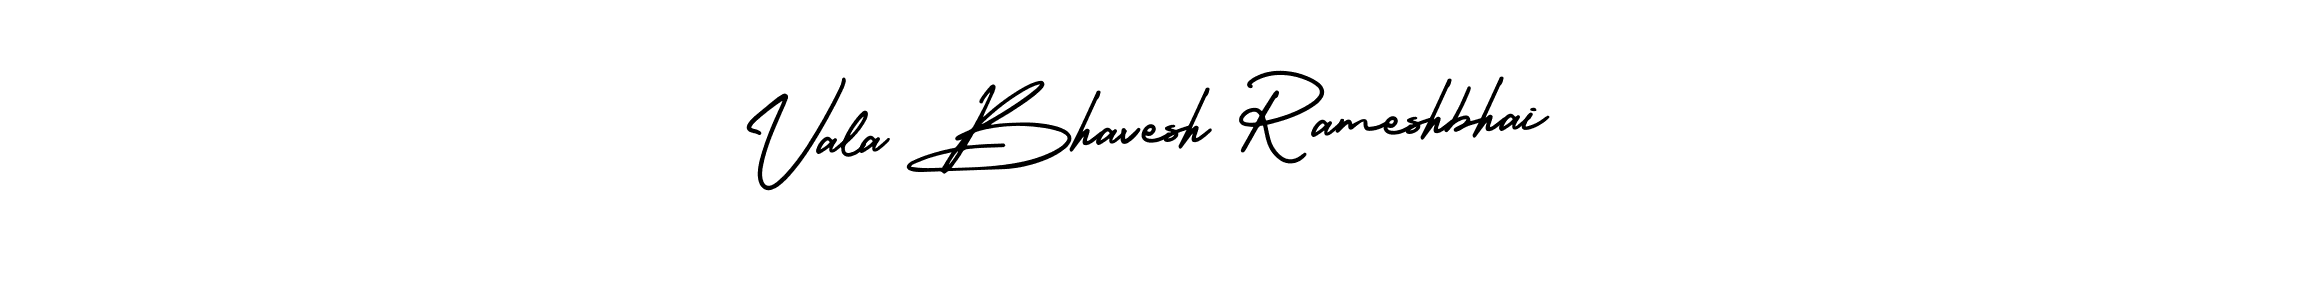 Best and Professional Signature Style for Vala Bhavesh Rameshbhai. AmerikaSignatureDemo-Regular Best Signature Style Collection. Vala Bhavesh Rameshbhai signature style 3 images and pictures png